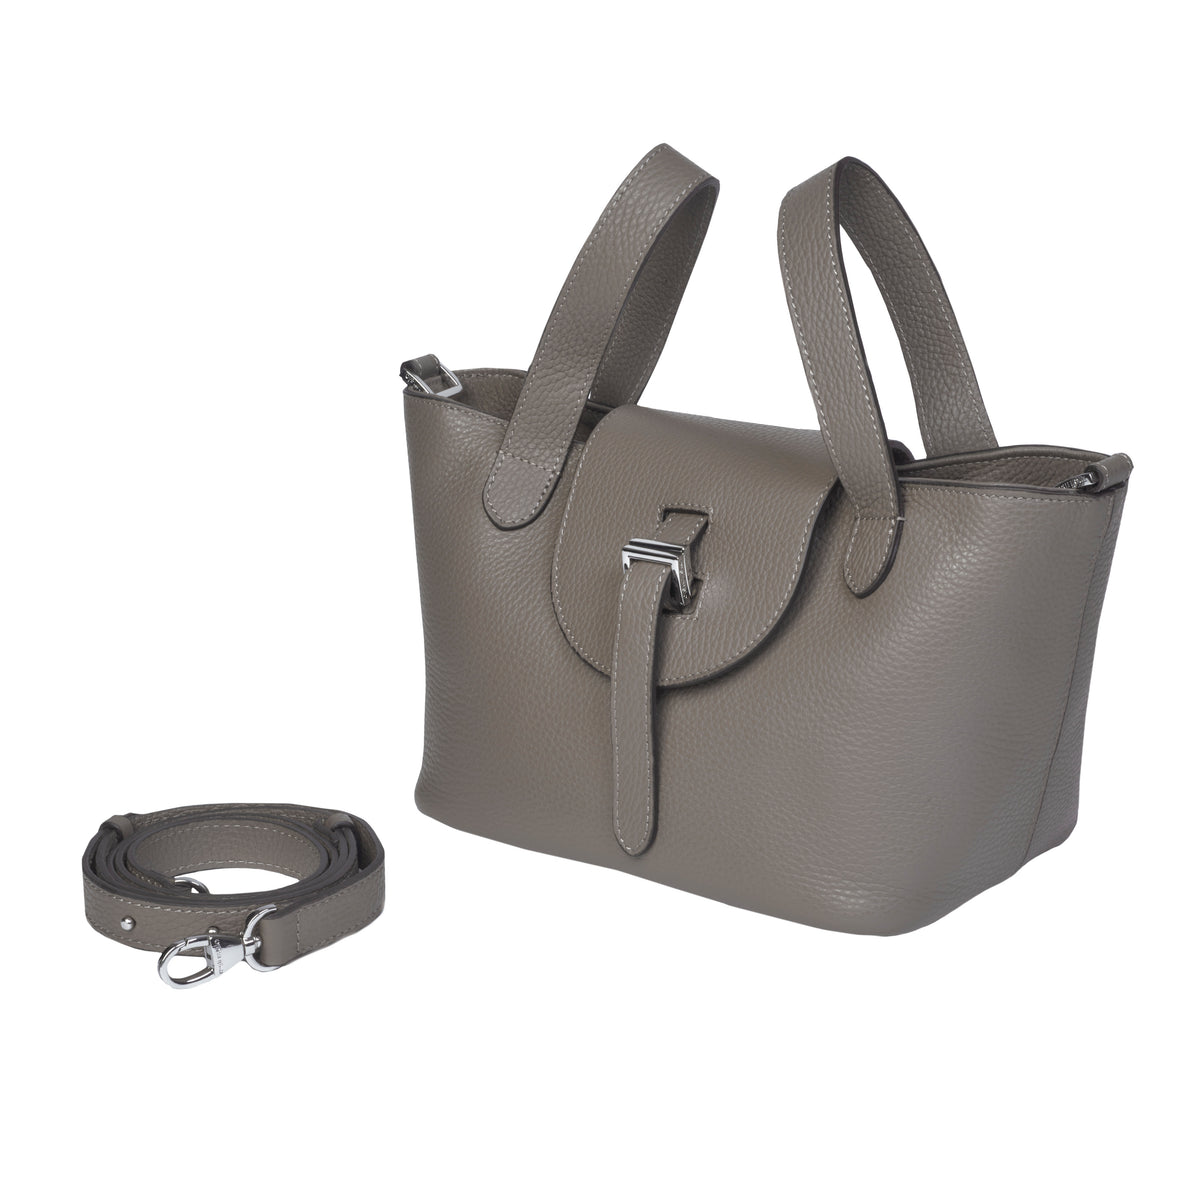 New Women Meli Melo Purse Handbag Bag Shoulder Crossbody Silver Strap Thela  Mini